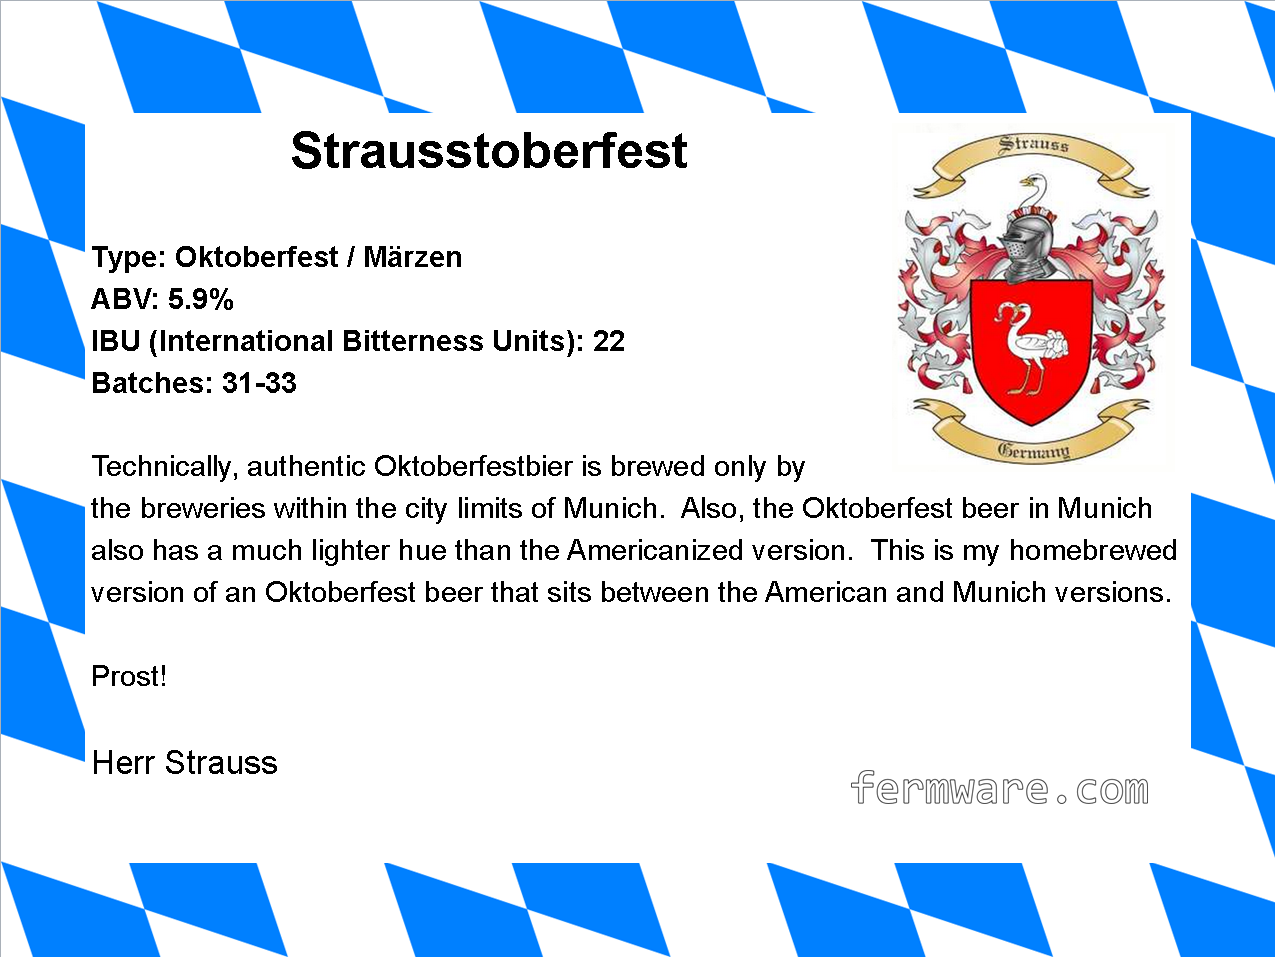 015-4-Strausstoberfest-label.png